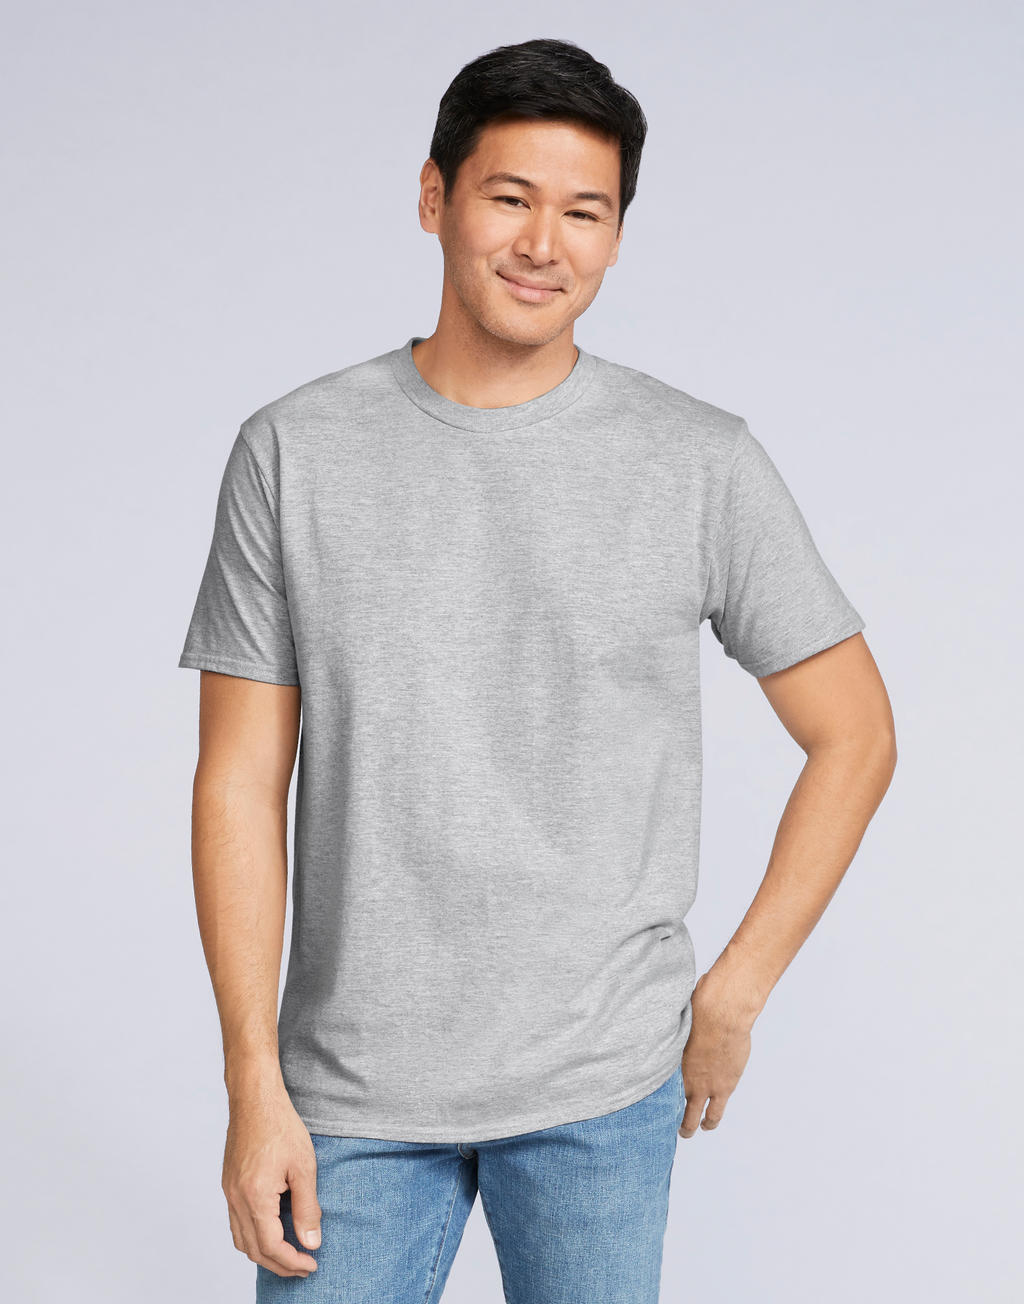 https://www.basic-shirts.de/out/pictures/master/product/1/105.09-gildan-premium-cotton-ring-spun-t-shirt-4100.jpg